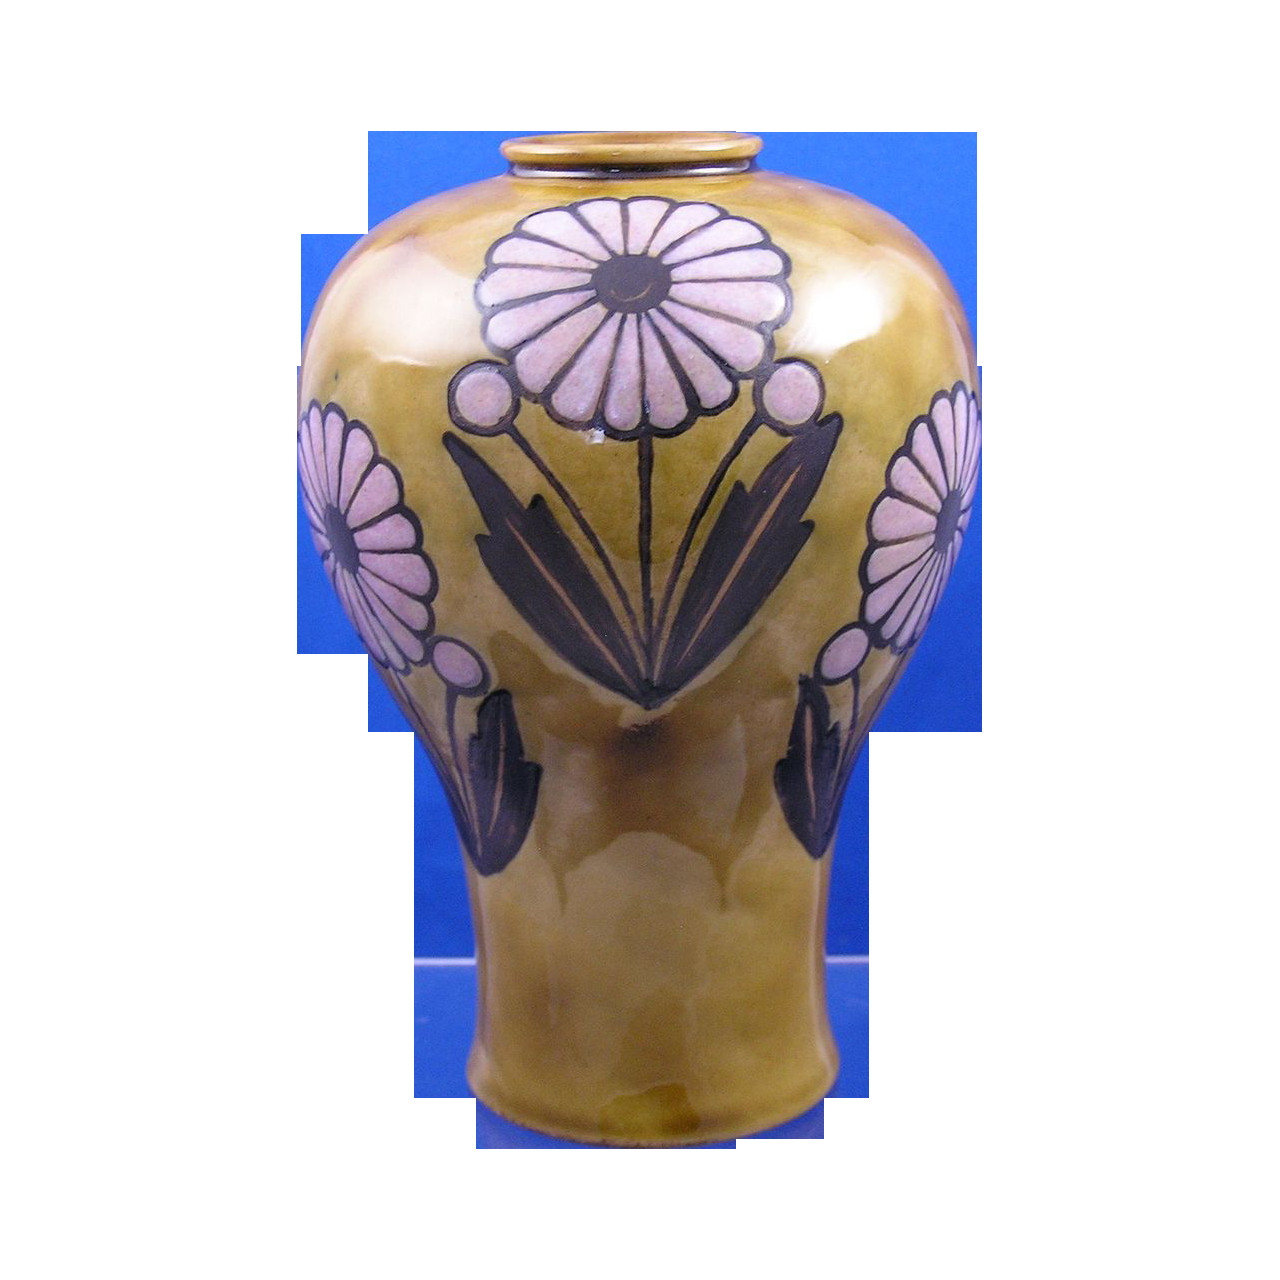 23 Perfect Royal Bonn Vase 2024 free download royal bonn vase of royal doulton arts crafts fruit motif vase signed by ma with royal doulton arts crafts daisy motif vase signed by bessie newberry c 1923